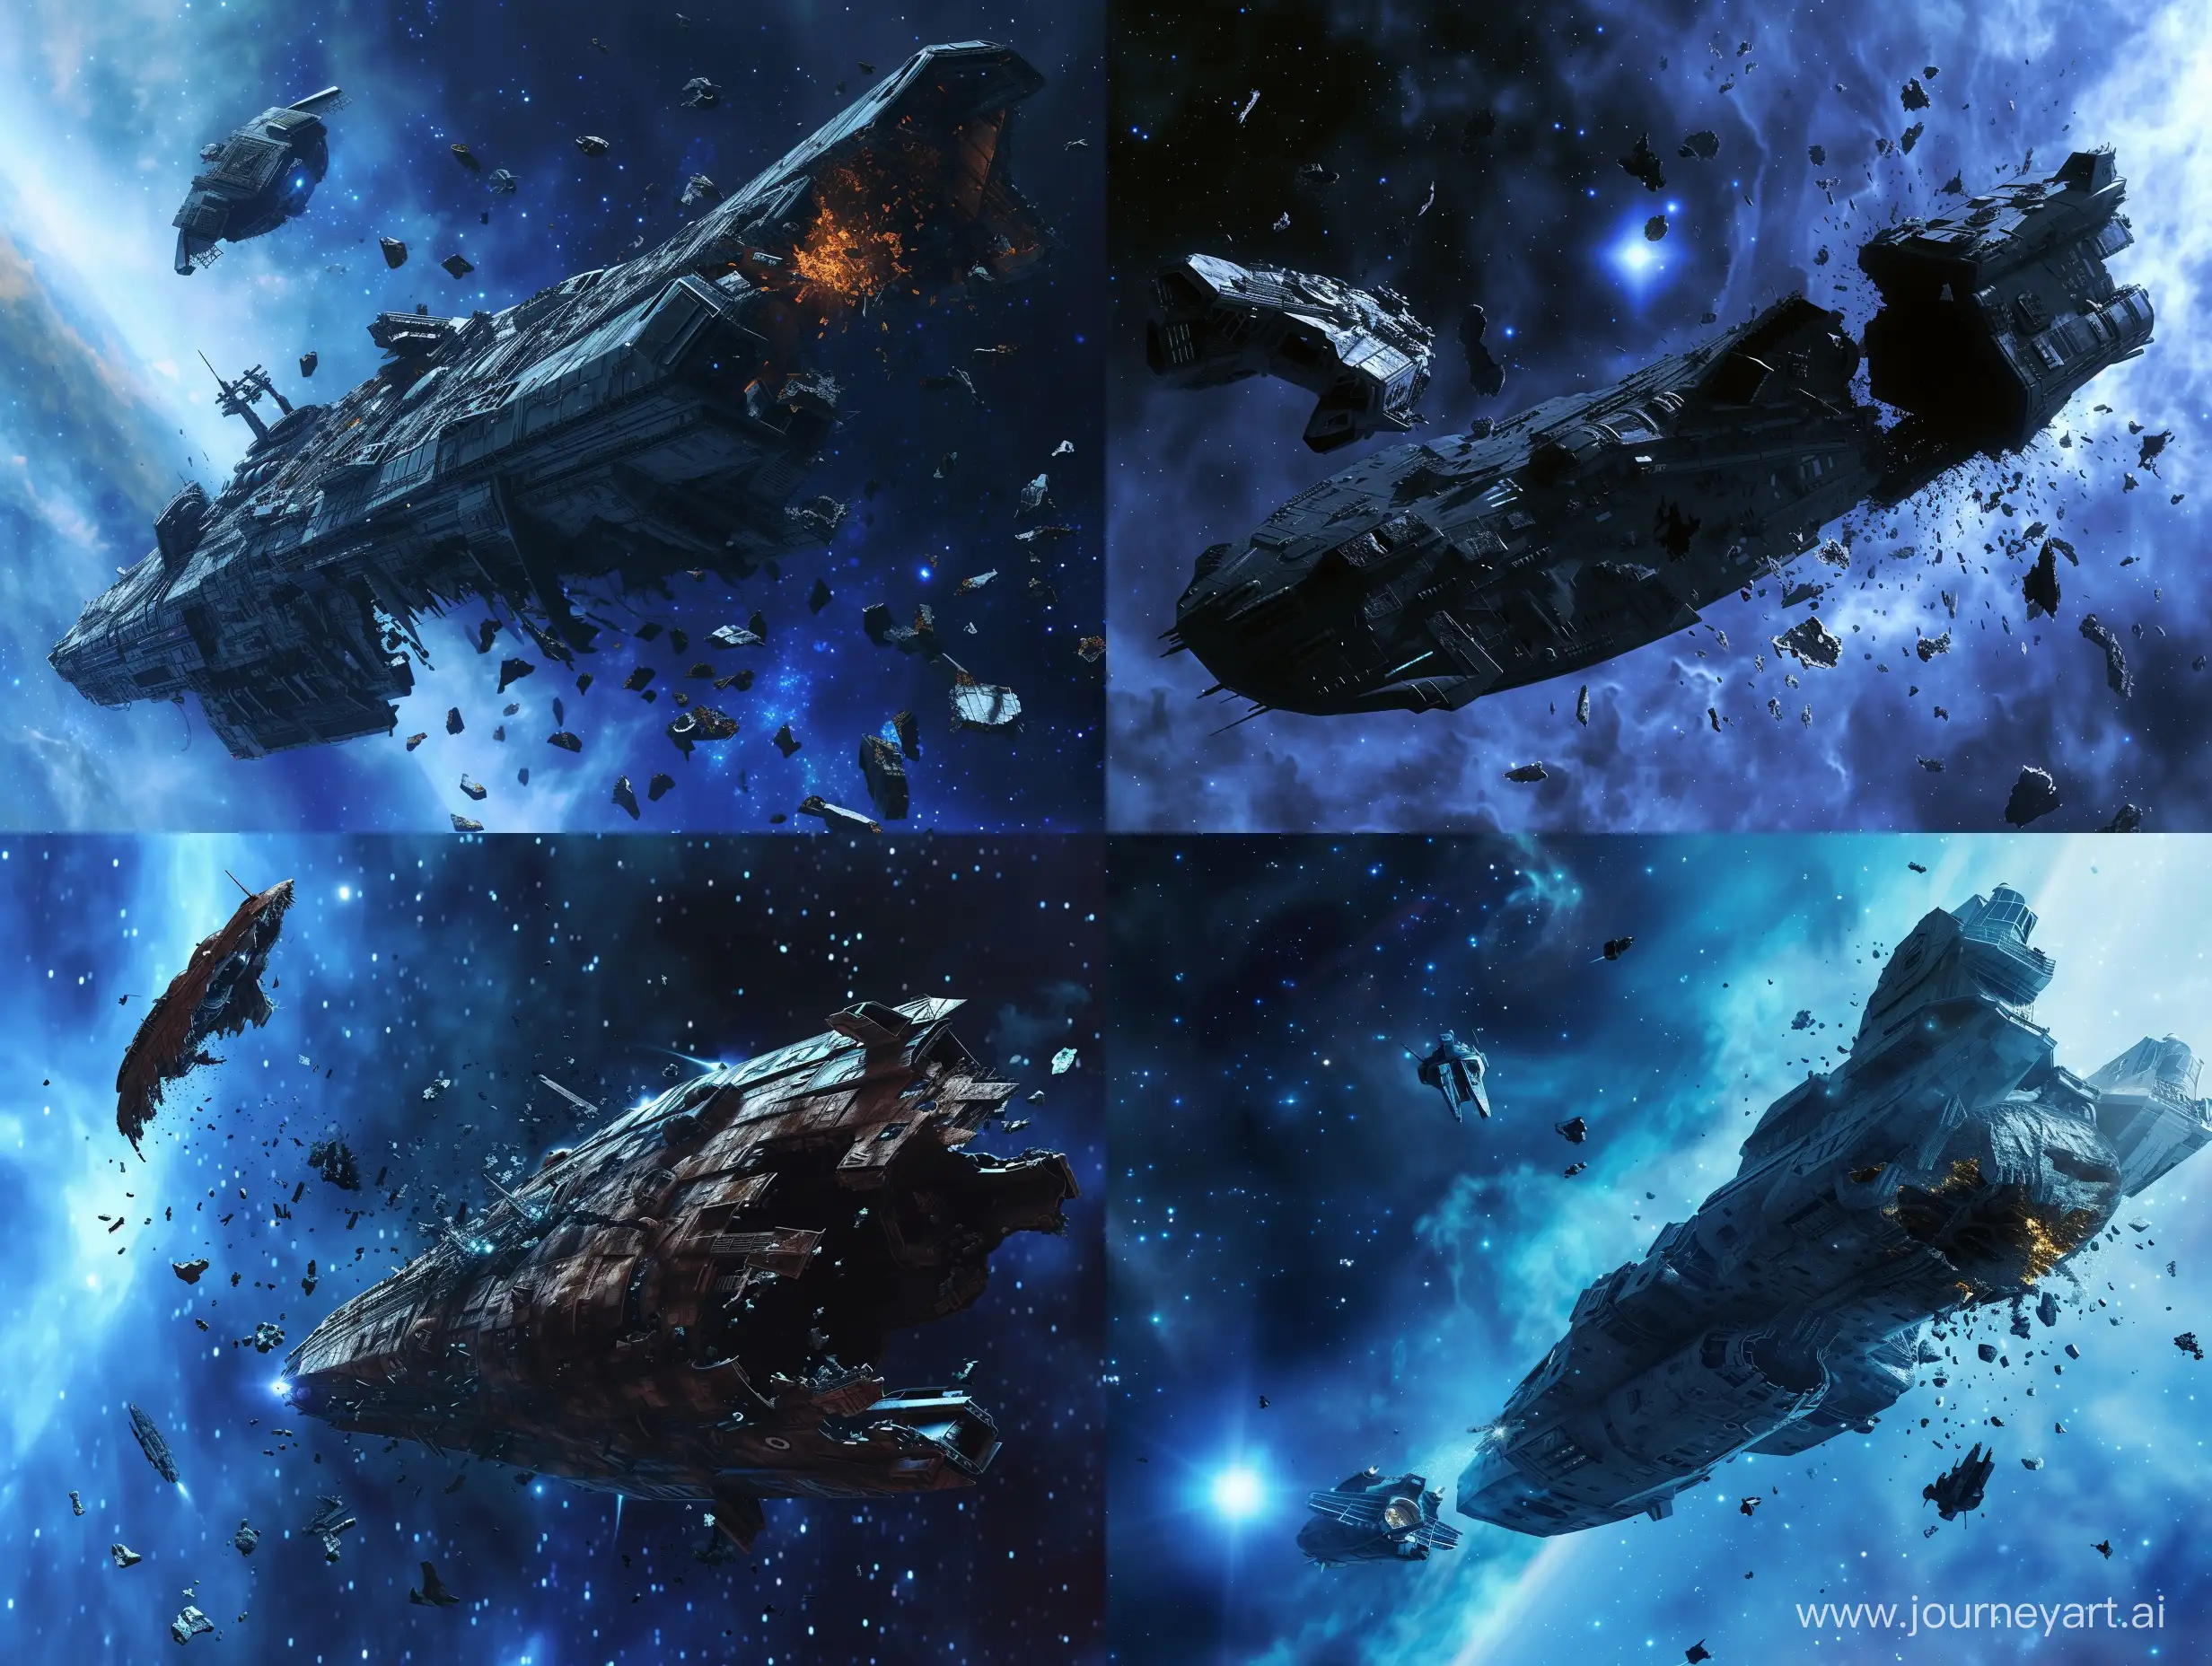 Ruined-Space-Battleship-Amidst-Cosmic-Debris-Against-Dark-Blue-Pulsar-Background